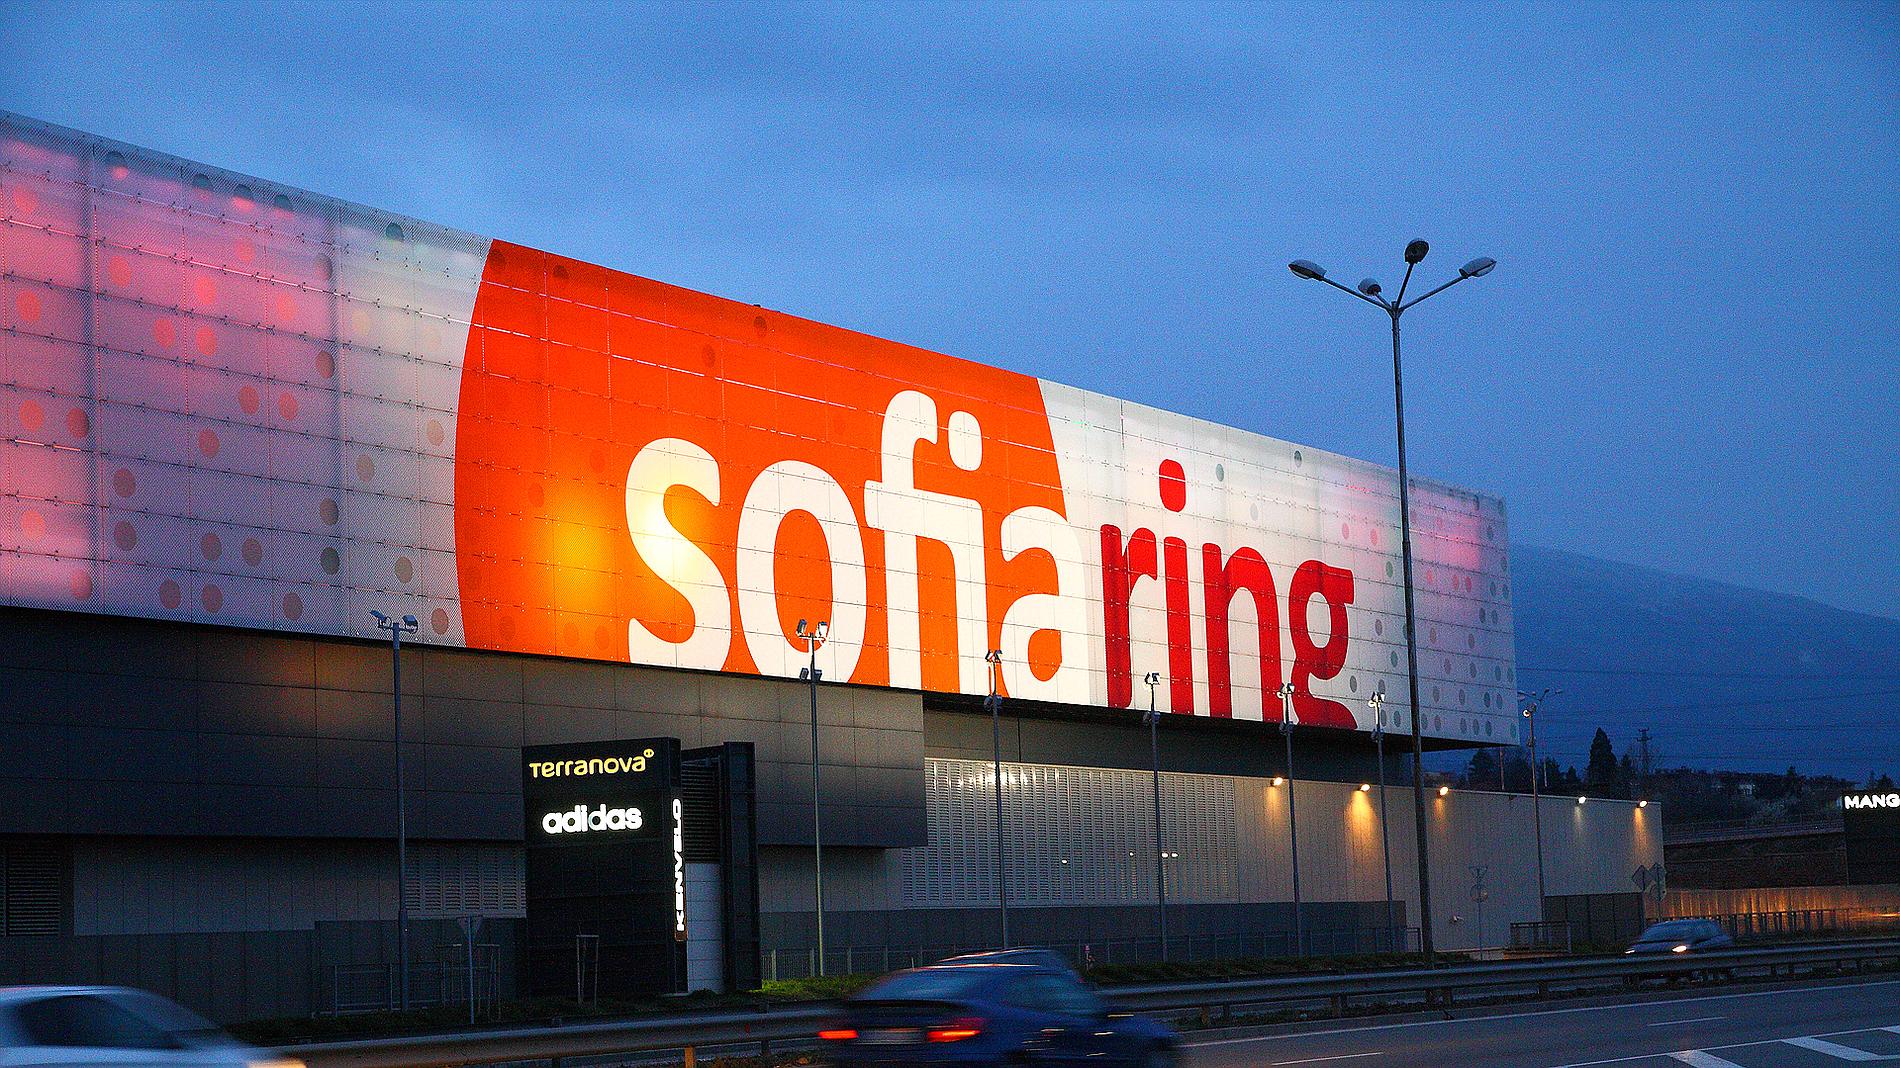 Sofia Ring Mall - glass facade branding